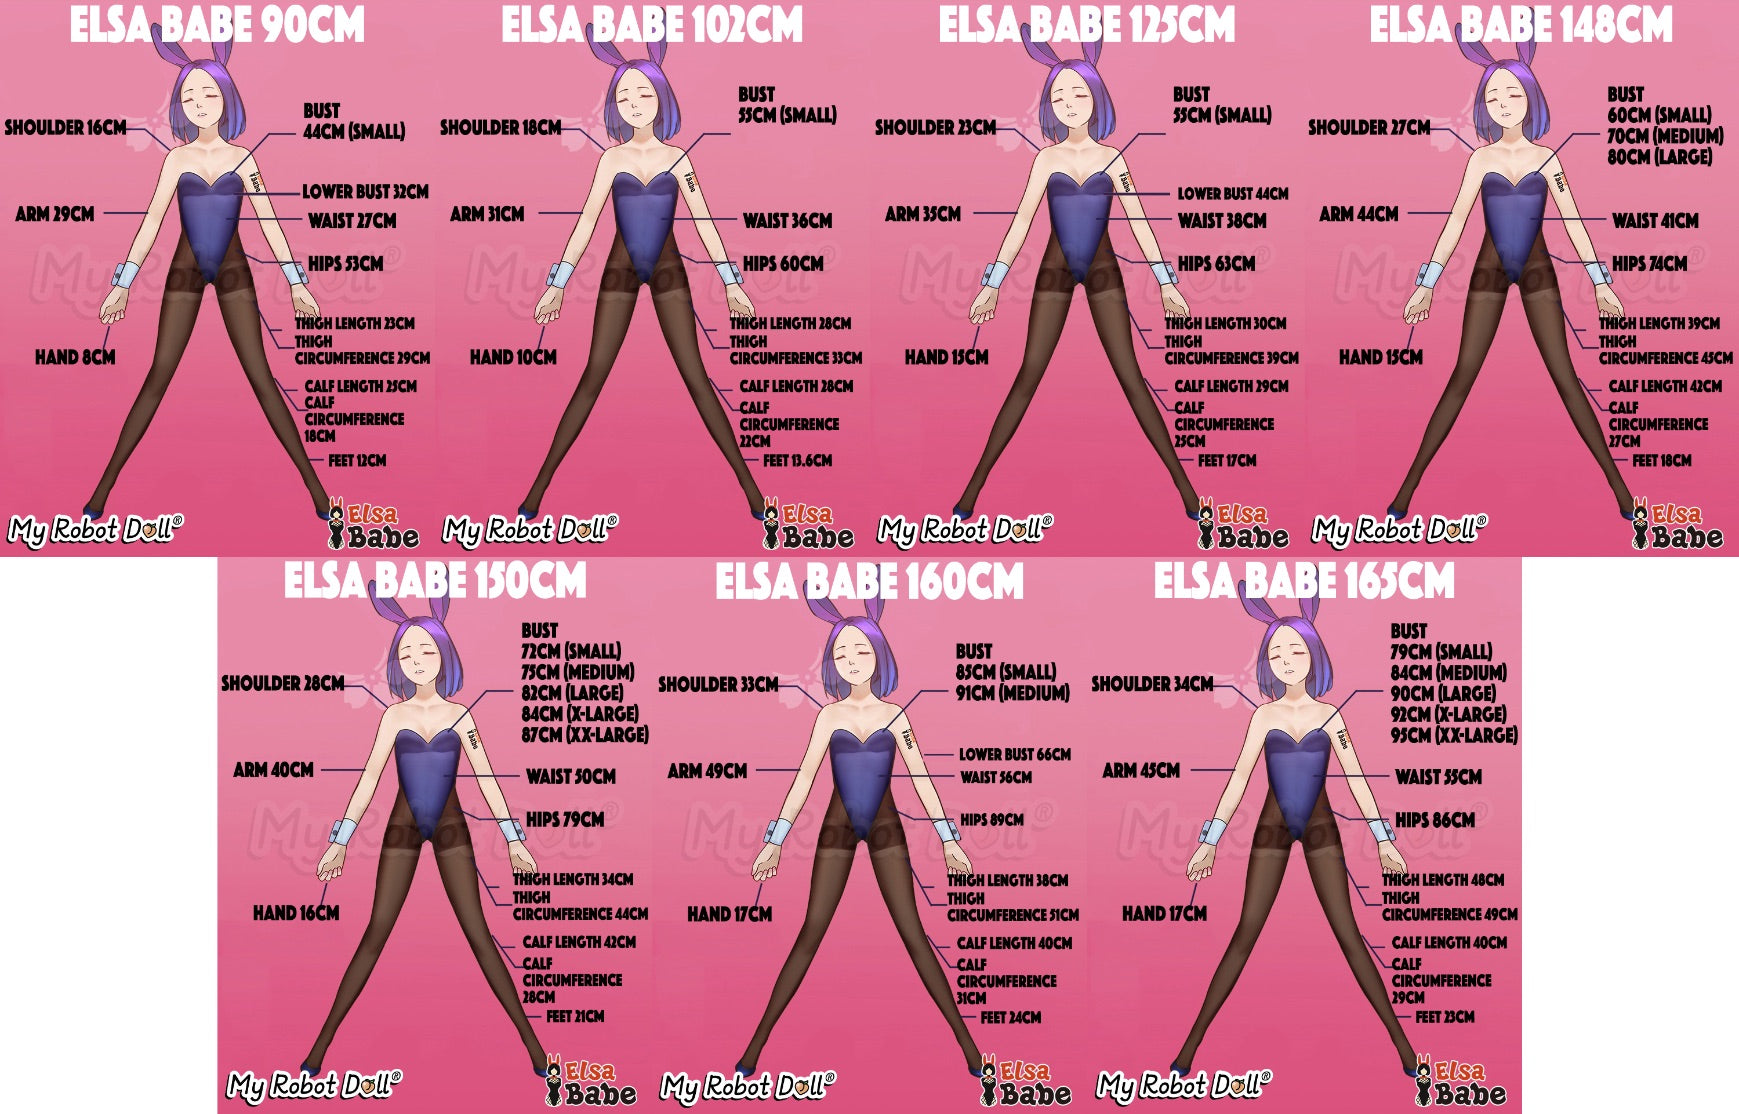 Elsa Babe body dimensions